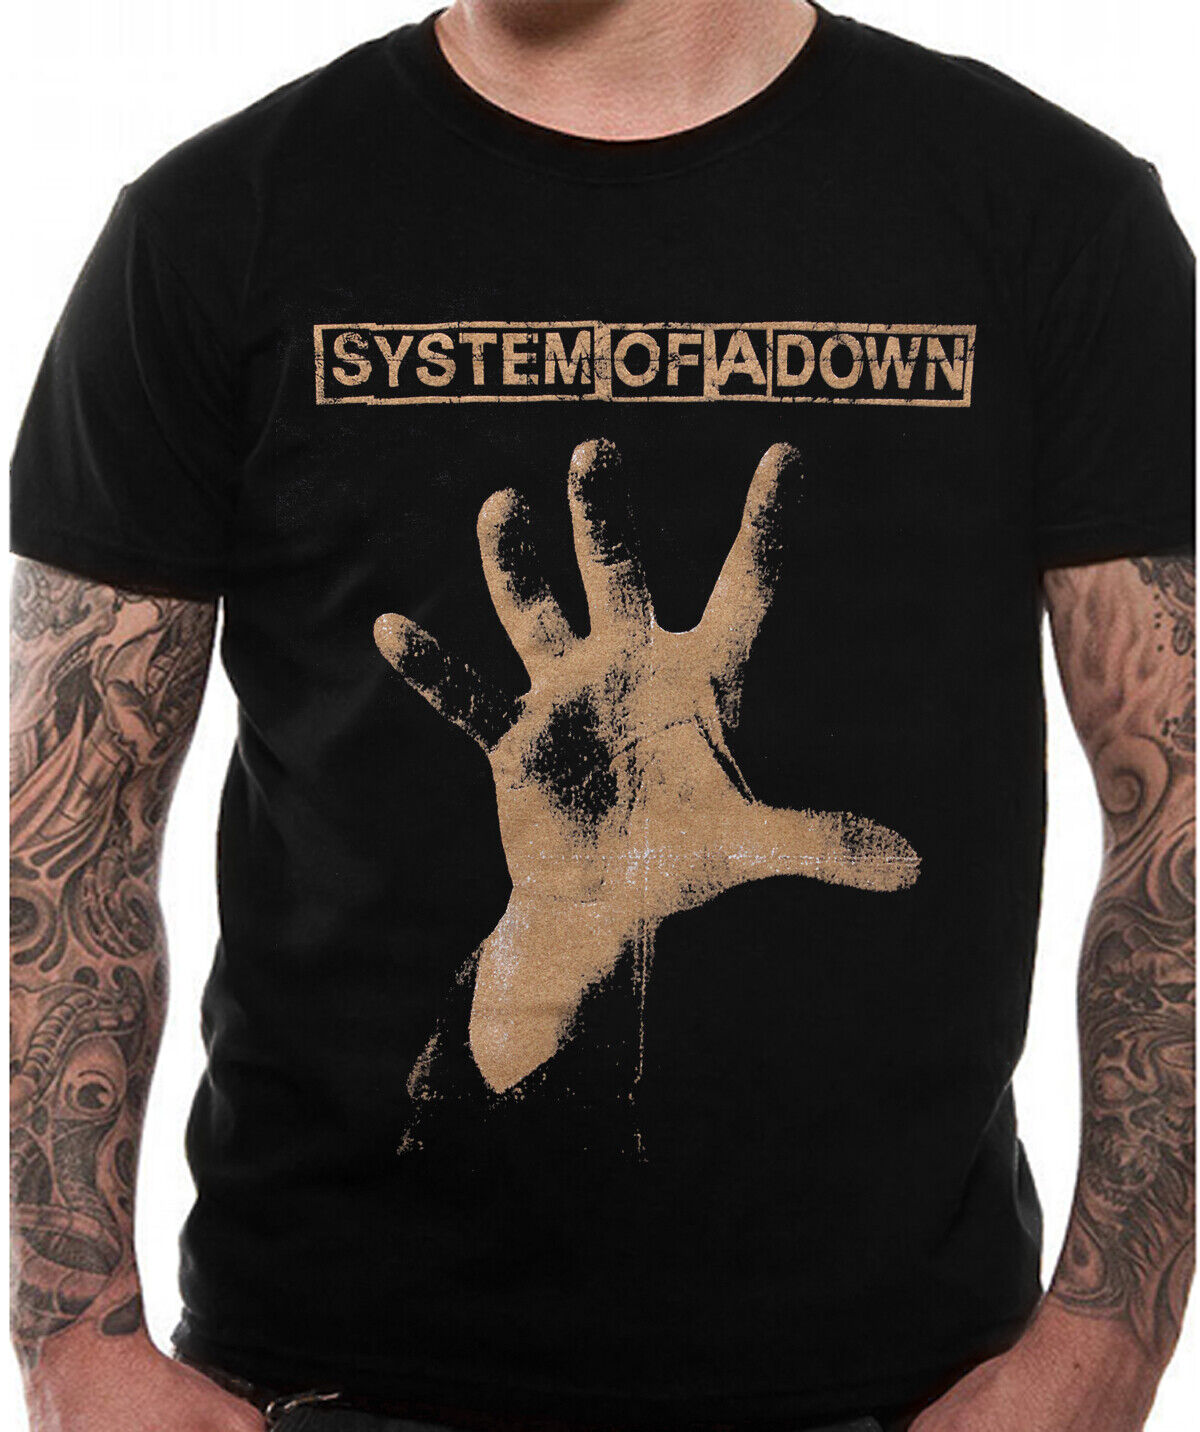 System of a Down - Album Cover - Shirt